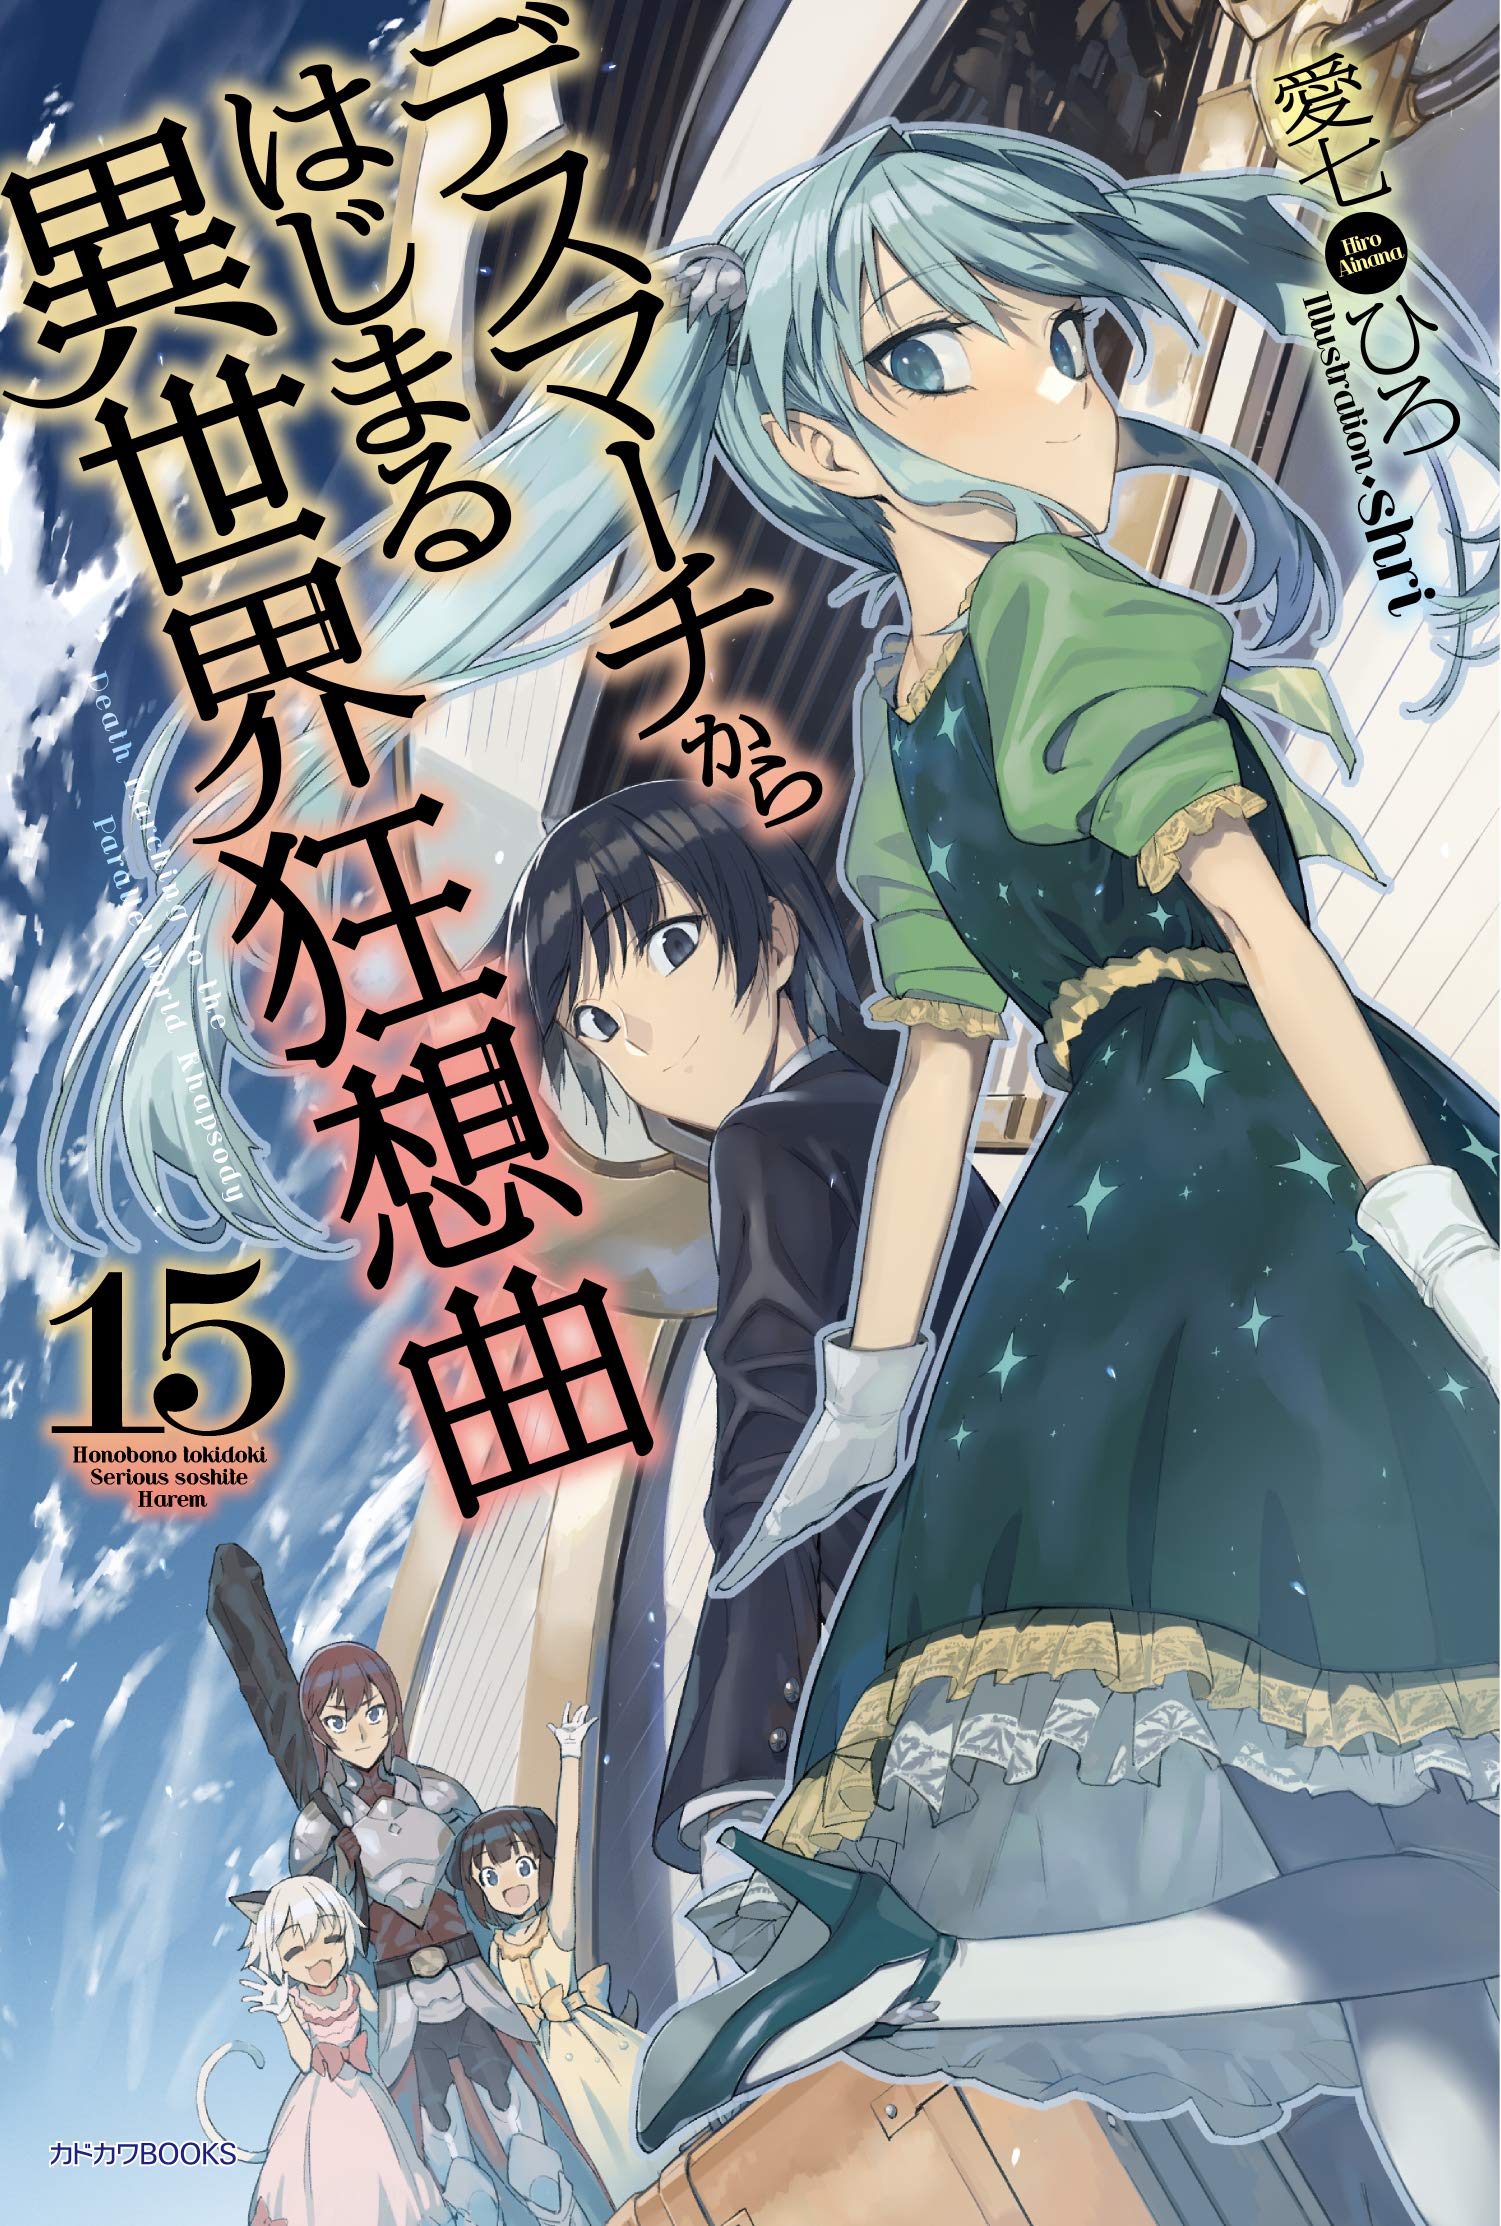 Tensei Kizoku no Isekai Boukenroku VL 1 Capitulo 4 Light novel